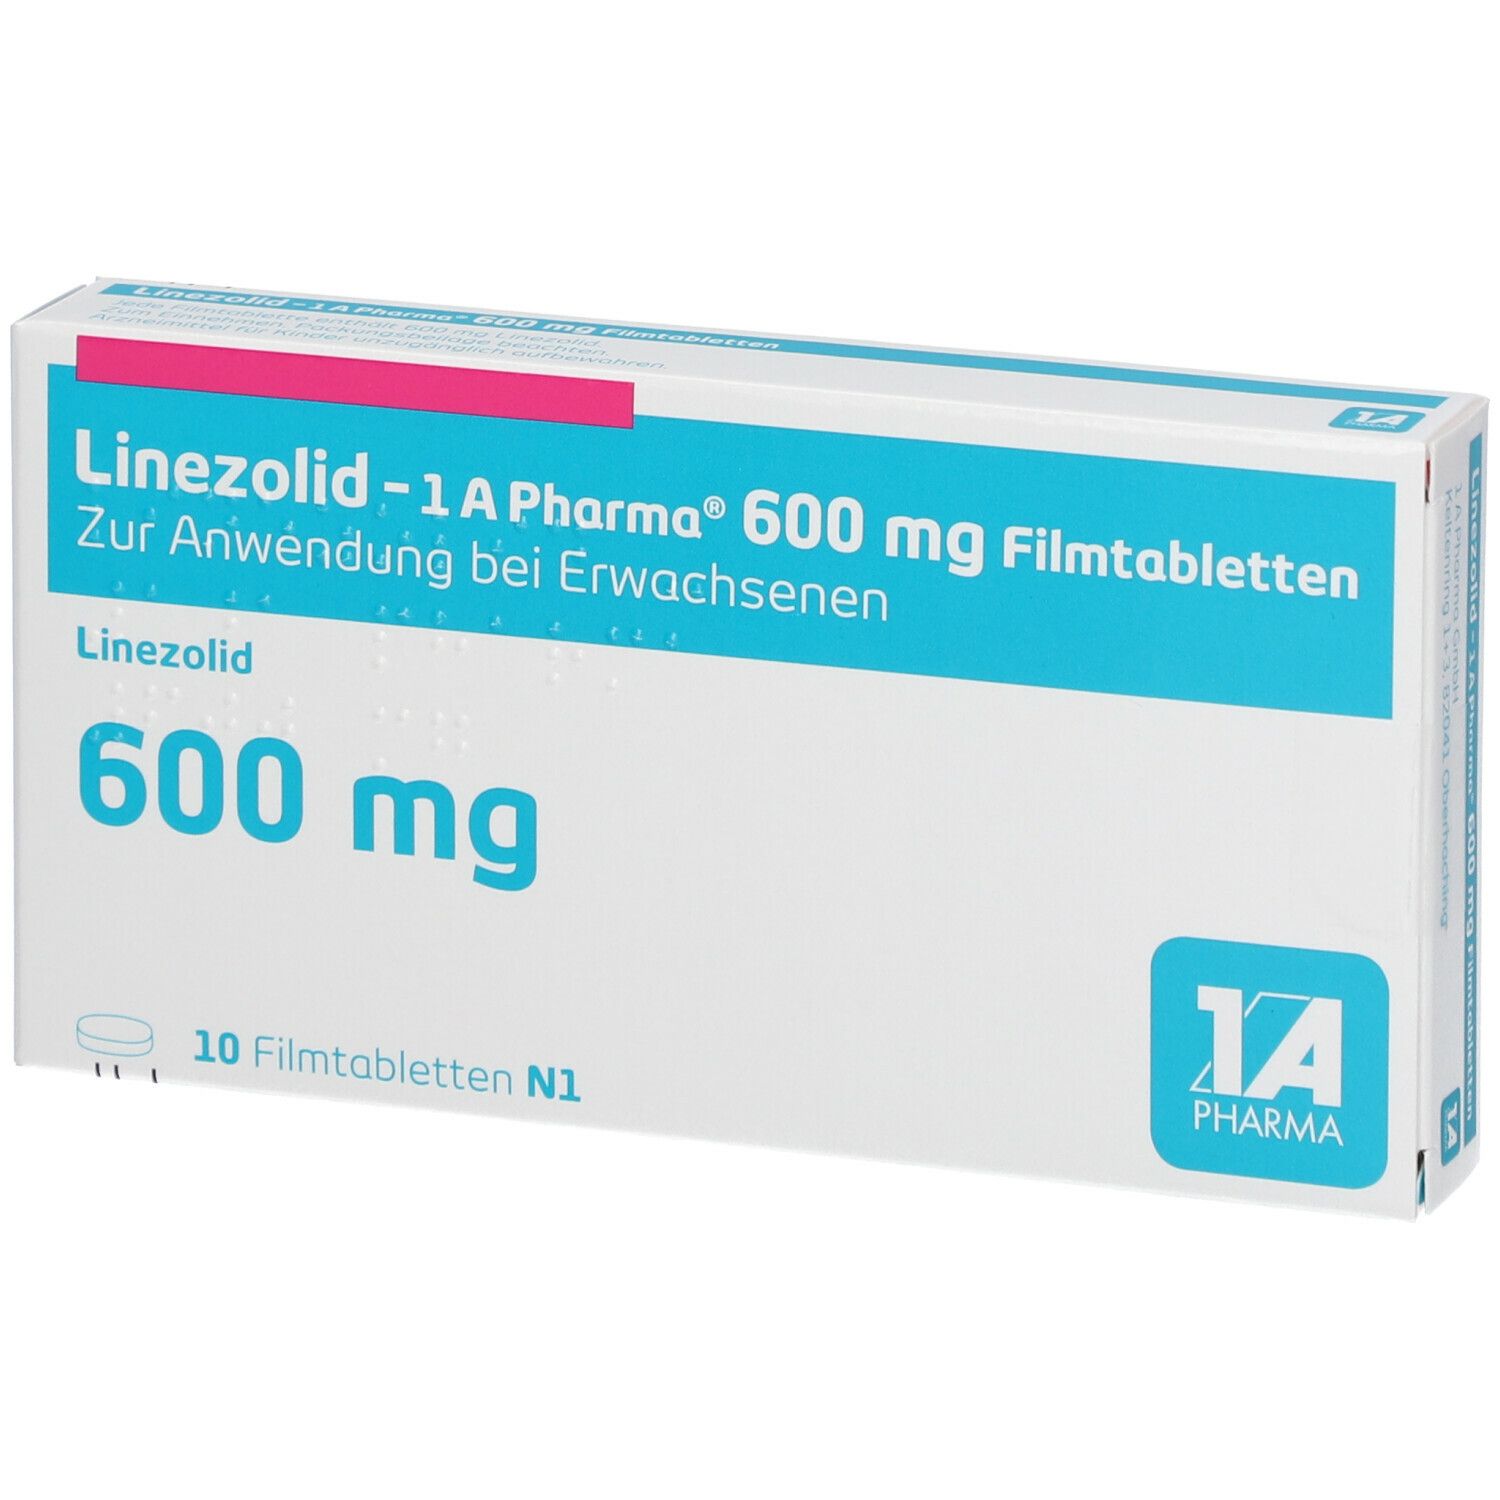 Linezolid 1A Pharma® 600Mg